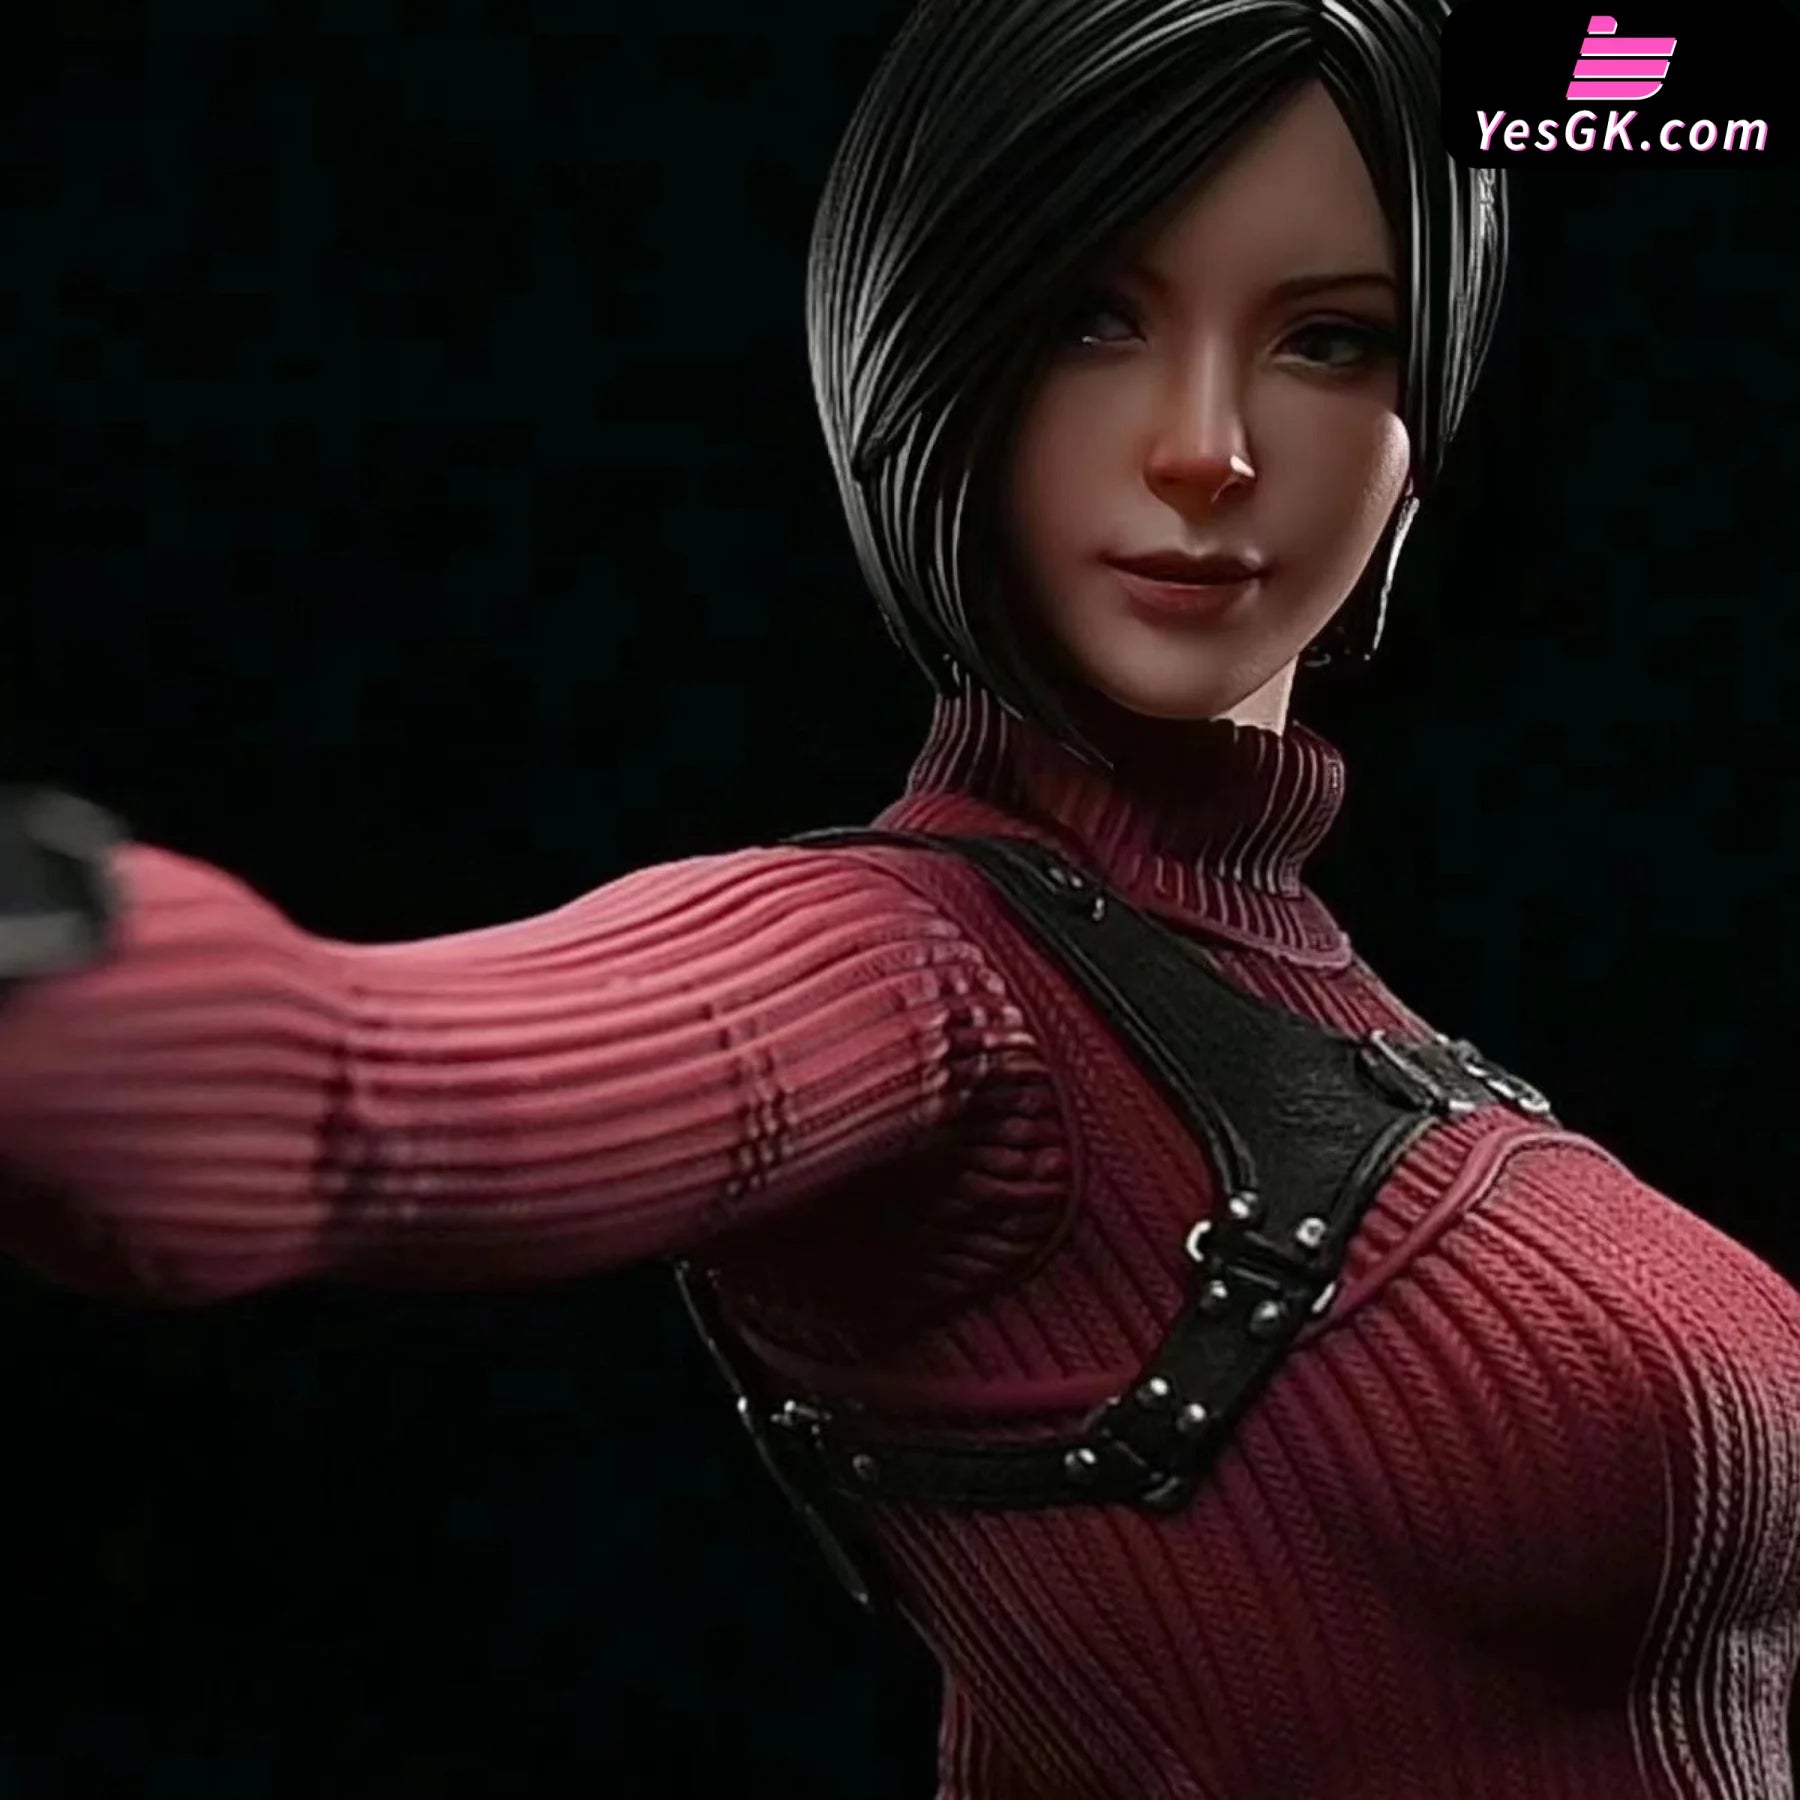 1/3 Scale Ada Wong Remake - Resident Evil 4 Resin Statue - FanArt Studio  [Pre-Order]